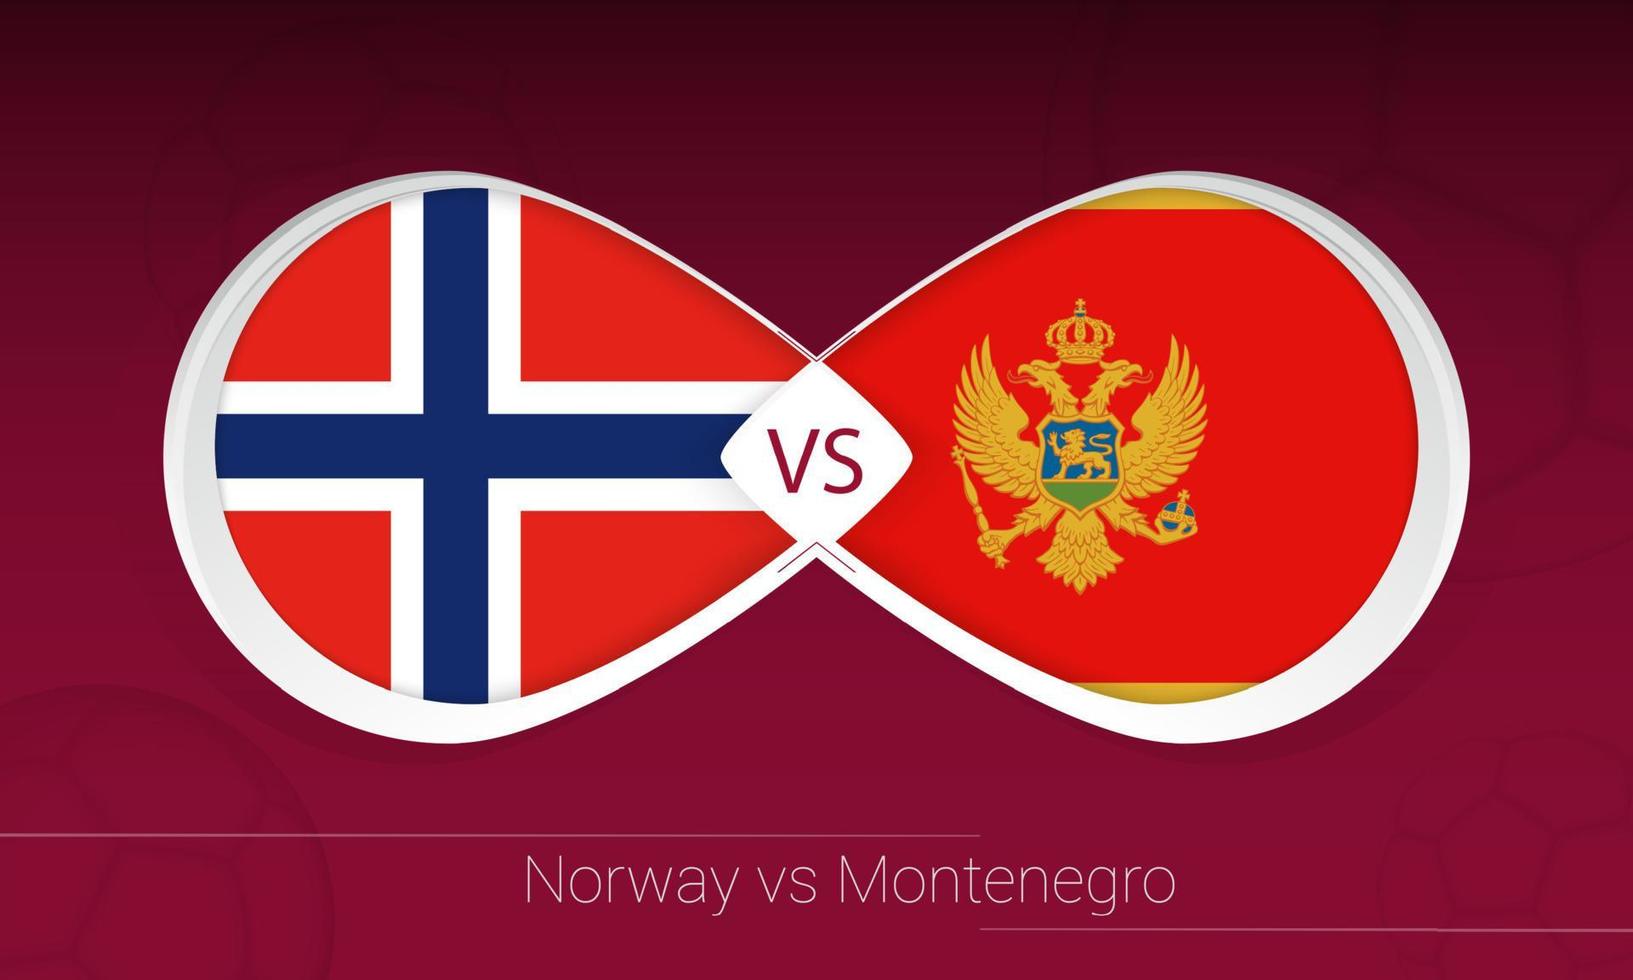 norge vs montenegro i fotbollstävling, grupp g. kontra ikonen på fotboll bakgrund. vektor